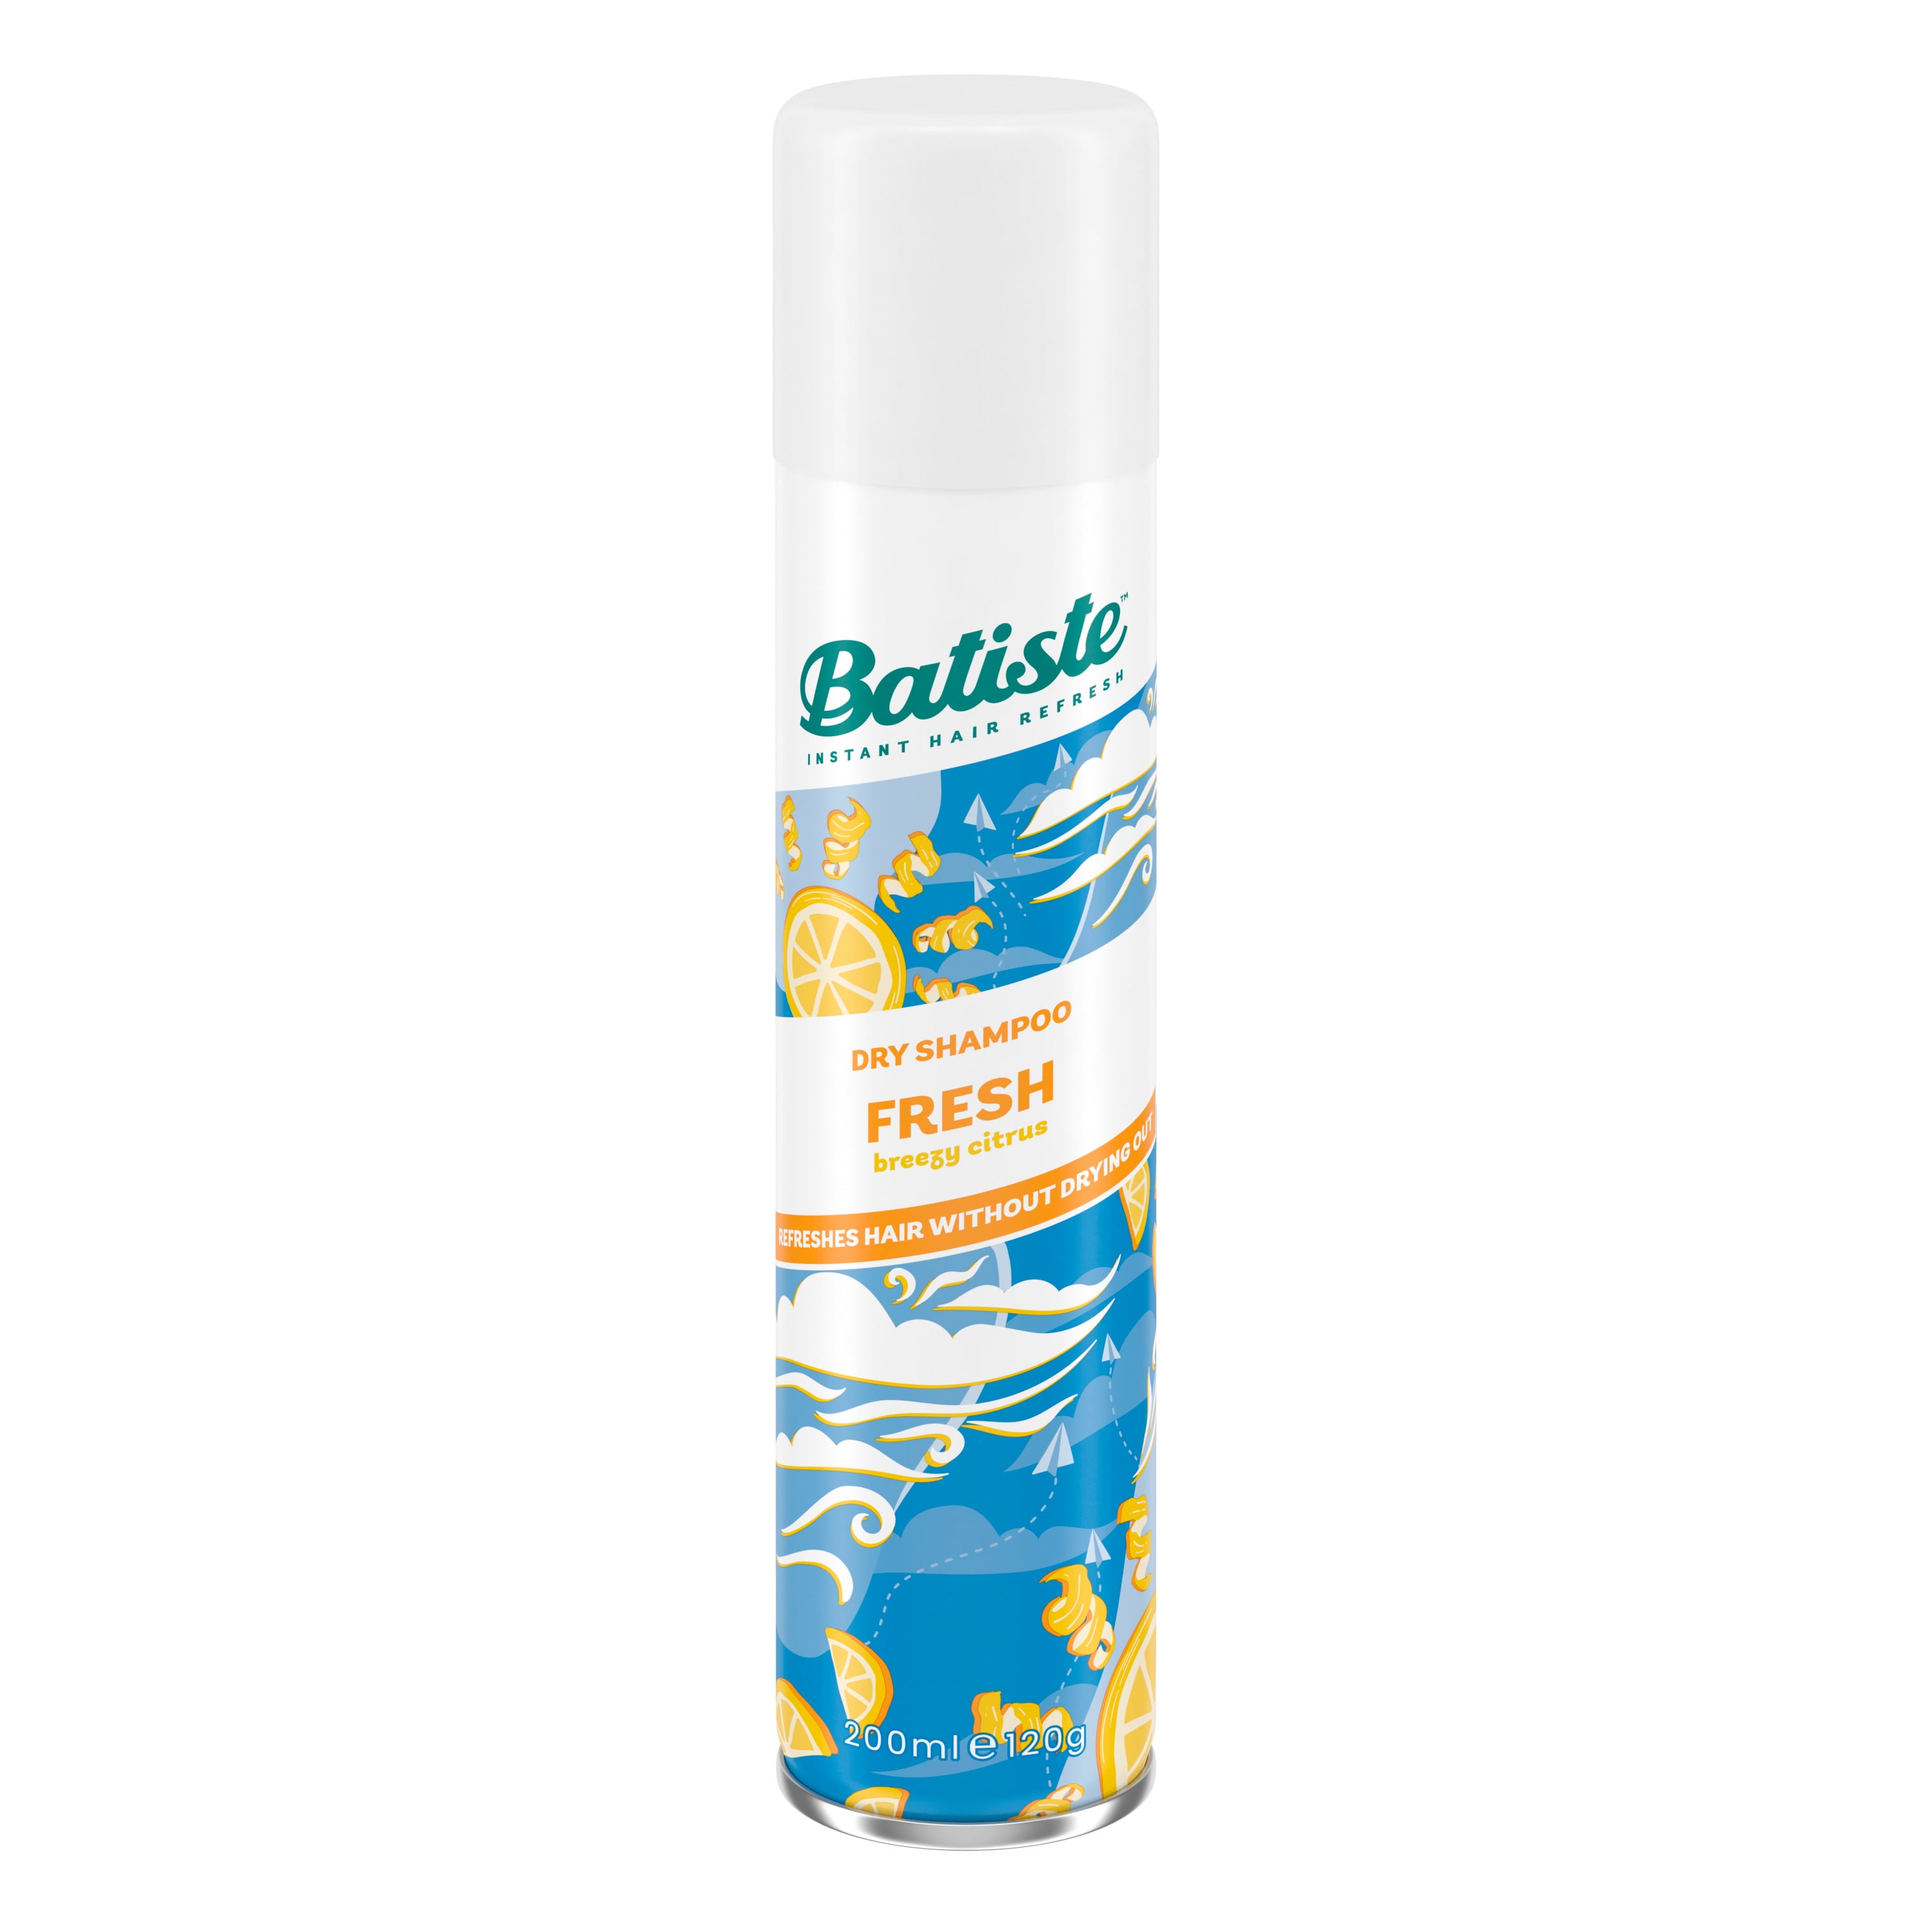 Batiste Dry Shampoo, Fresh Fragrance, 4.23 - Packaging Vary - Walmart.com